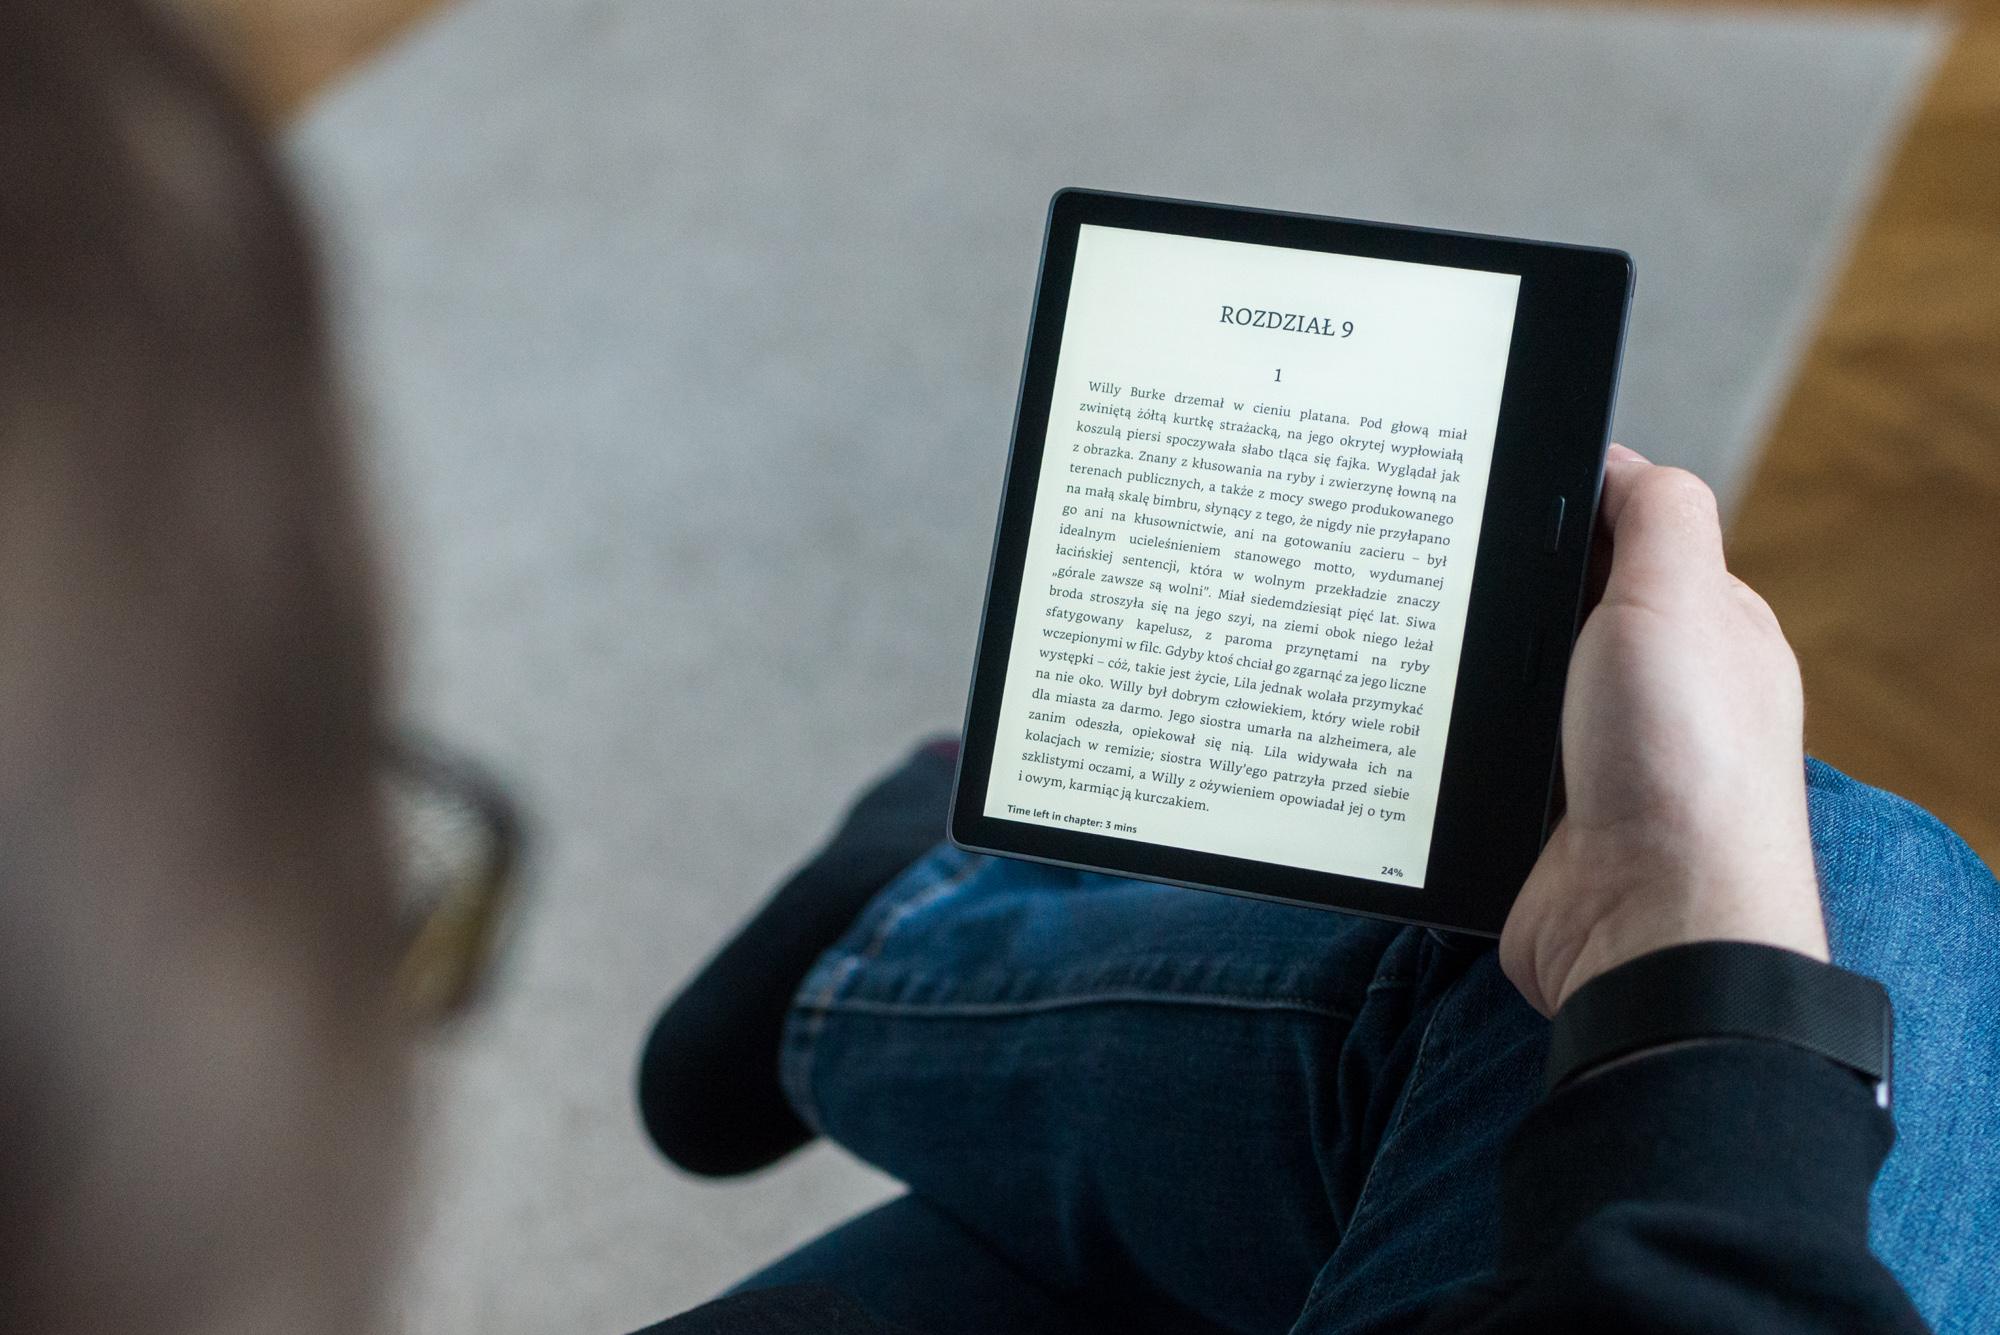 Реклама электронных книг. Amazon Kindle 5. Человек с электронной книгой. Реклама электронной книги. Обои для электронной книги.